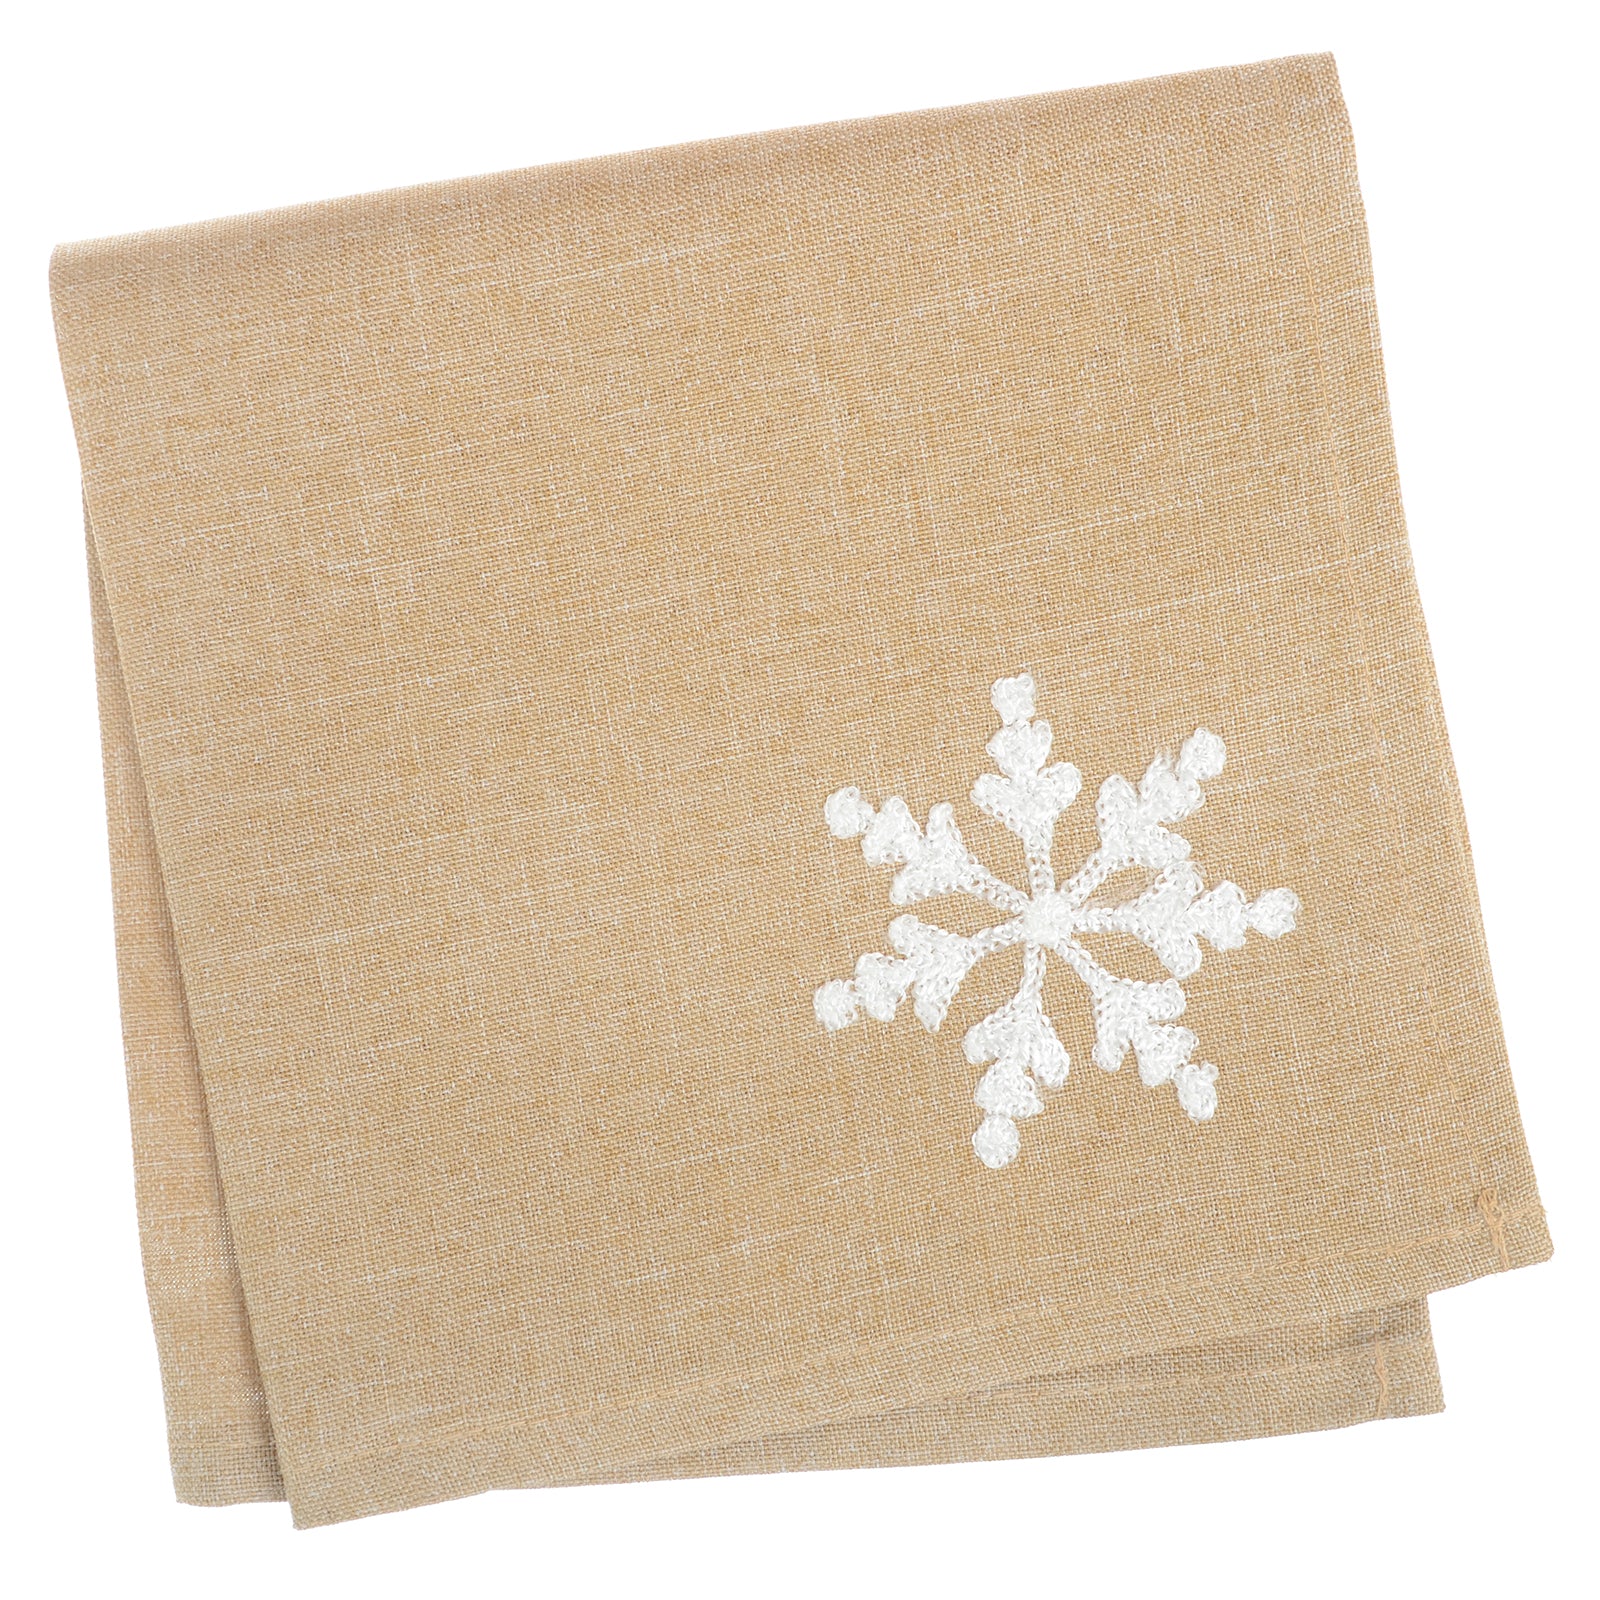 Mr Crimbo Let it Snow Embroidered Tablecloth/Napkin - MrCrimbo.co.uk -XS5872 - Biscuit -christmas napkins